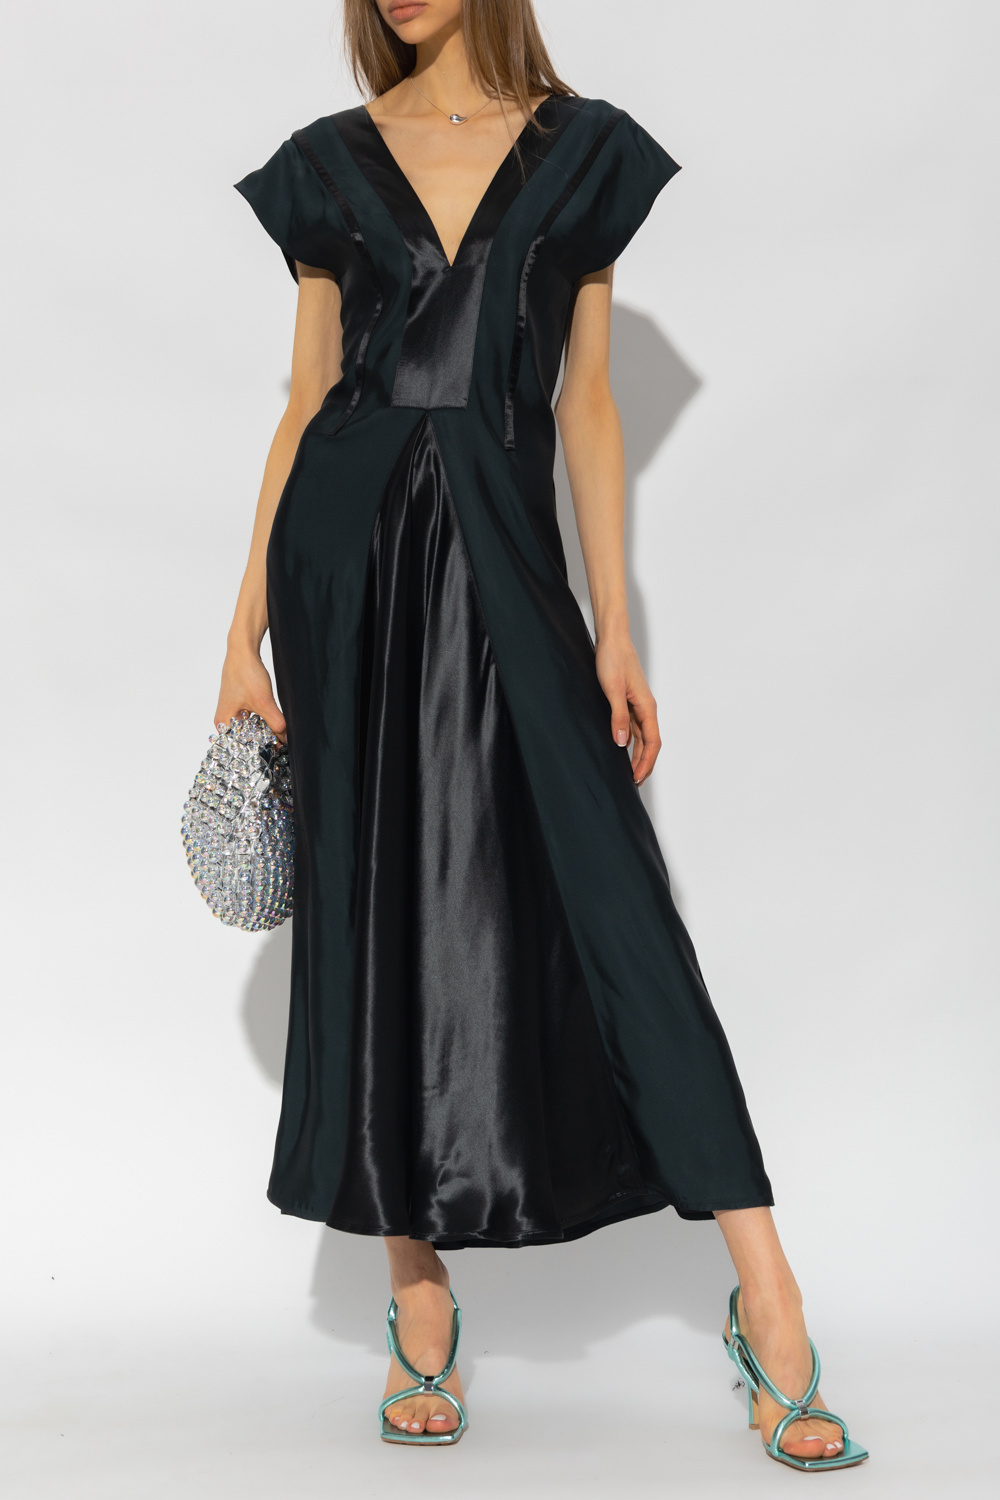 bottega classic Veneta Sleeveless dress